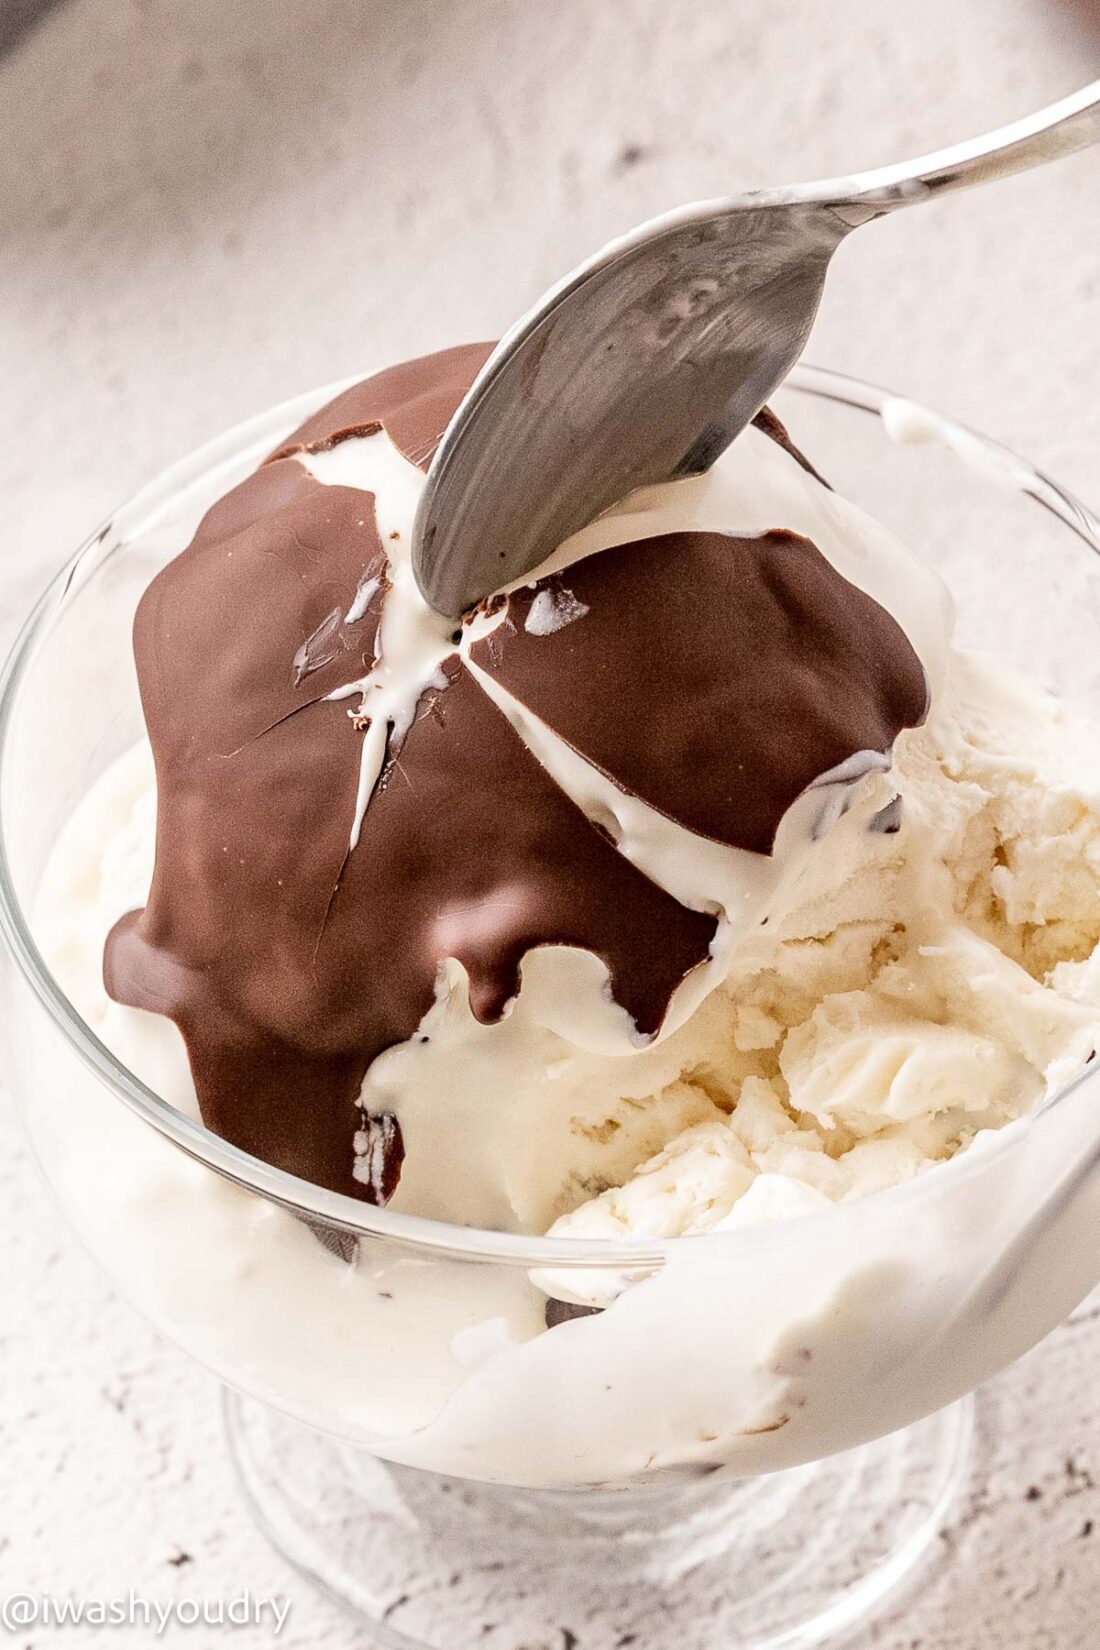 spoon breaking chocolate magic shell topping over vanilla ice cream.